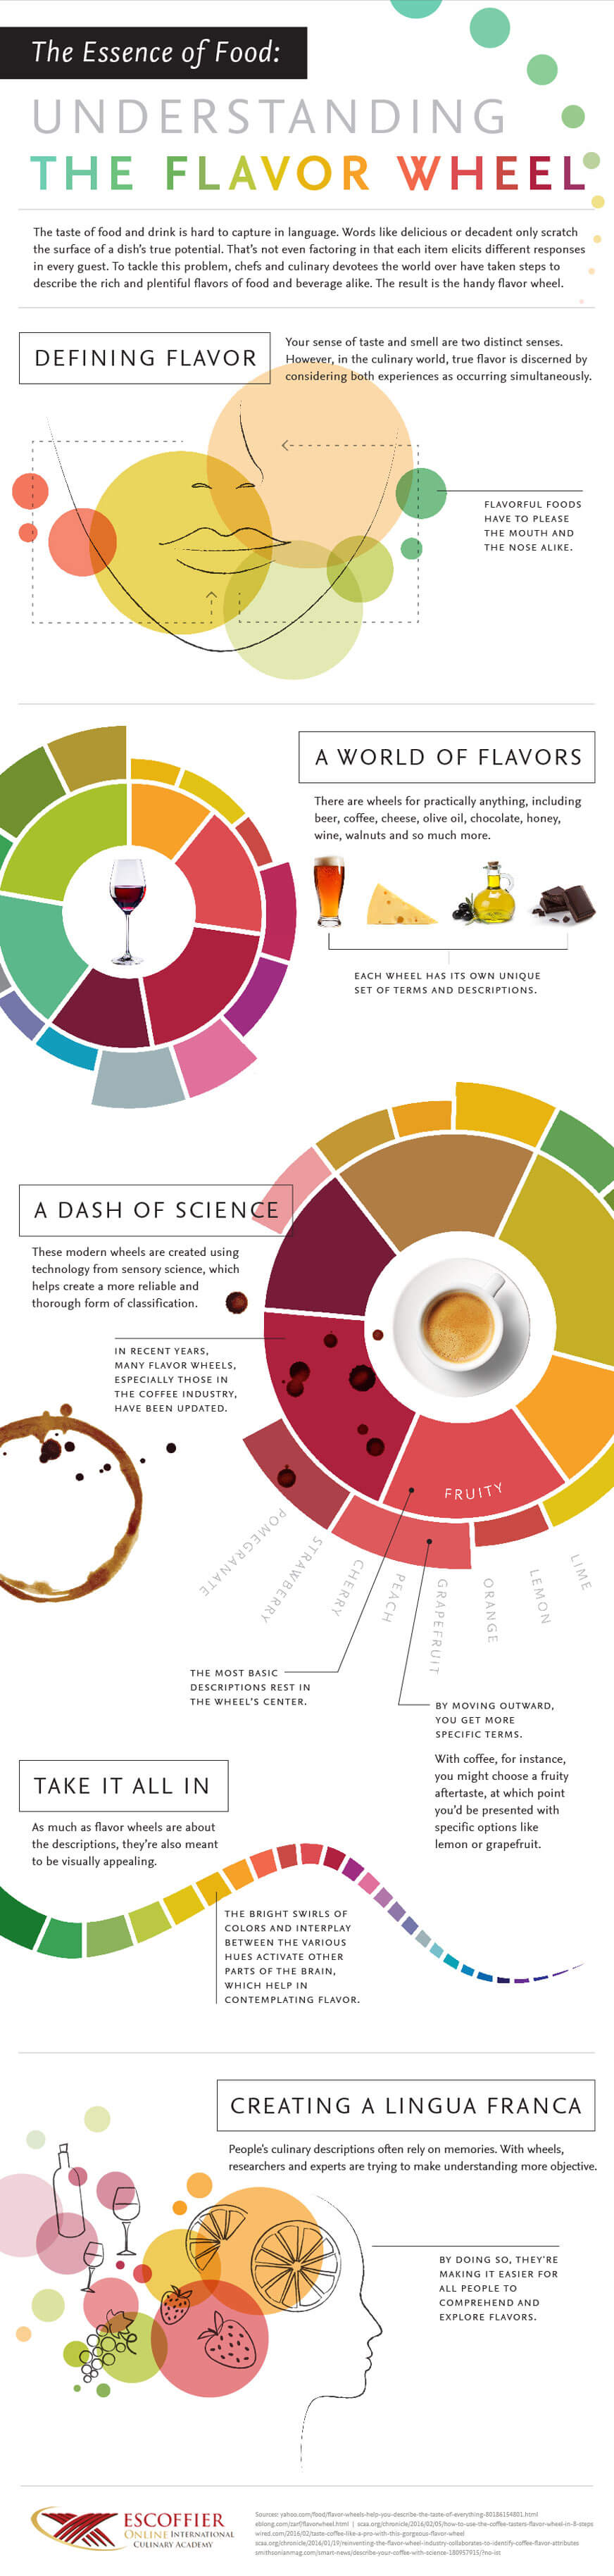 Escoffier flavor wheel infographic